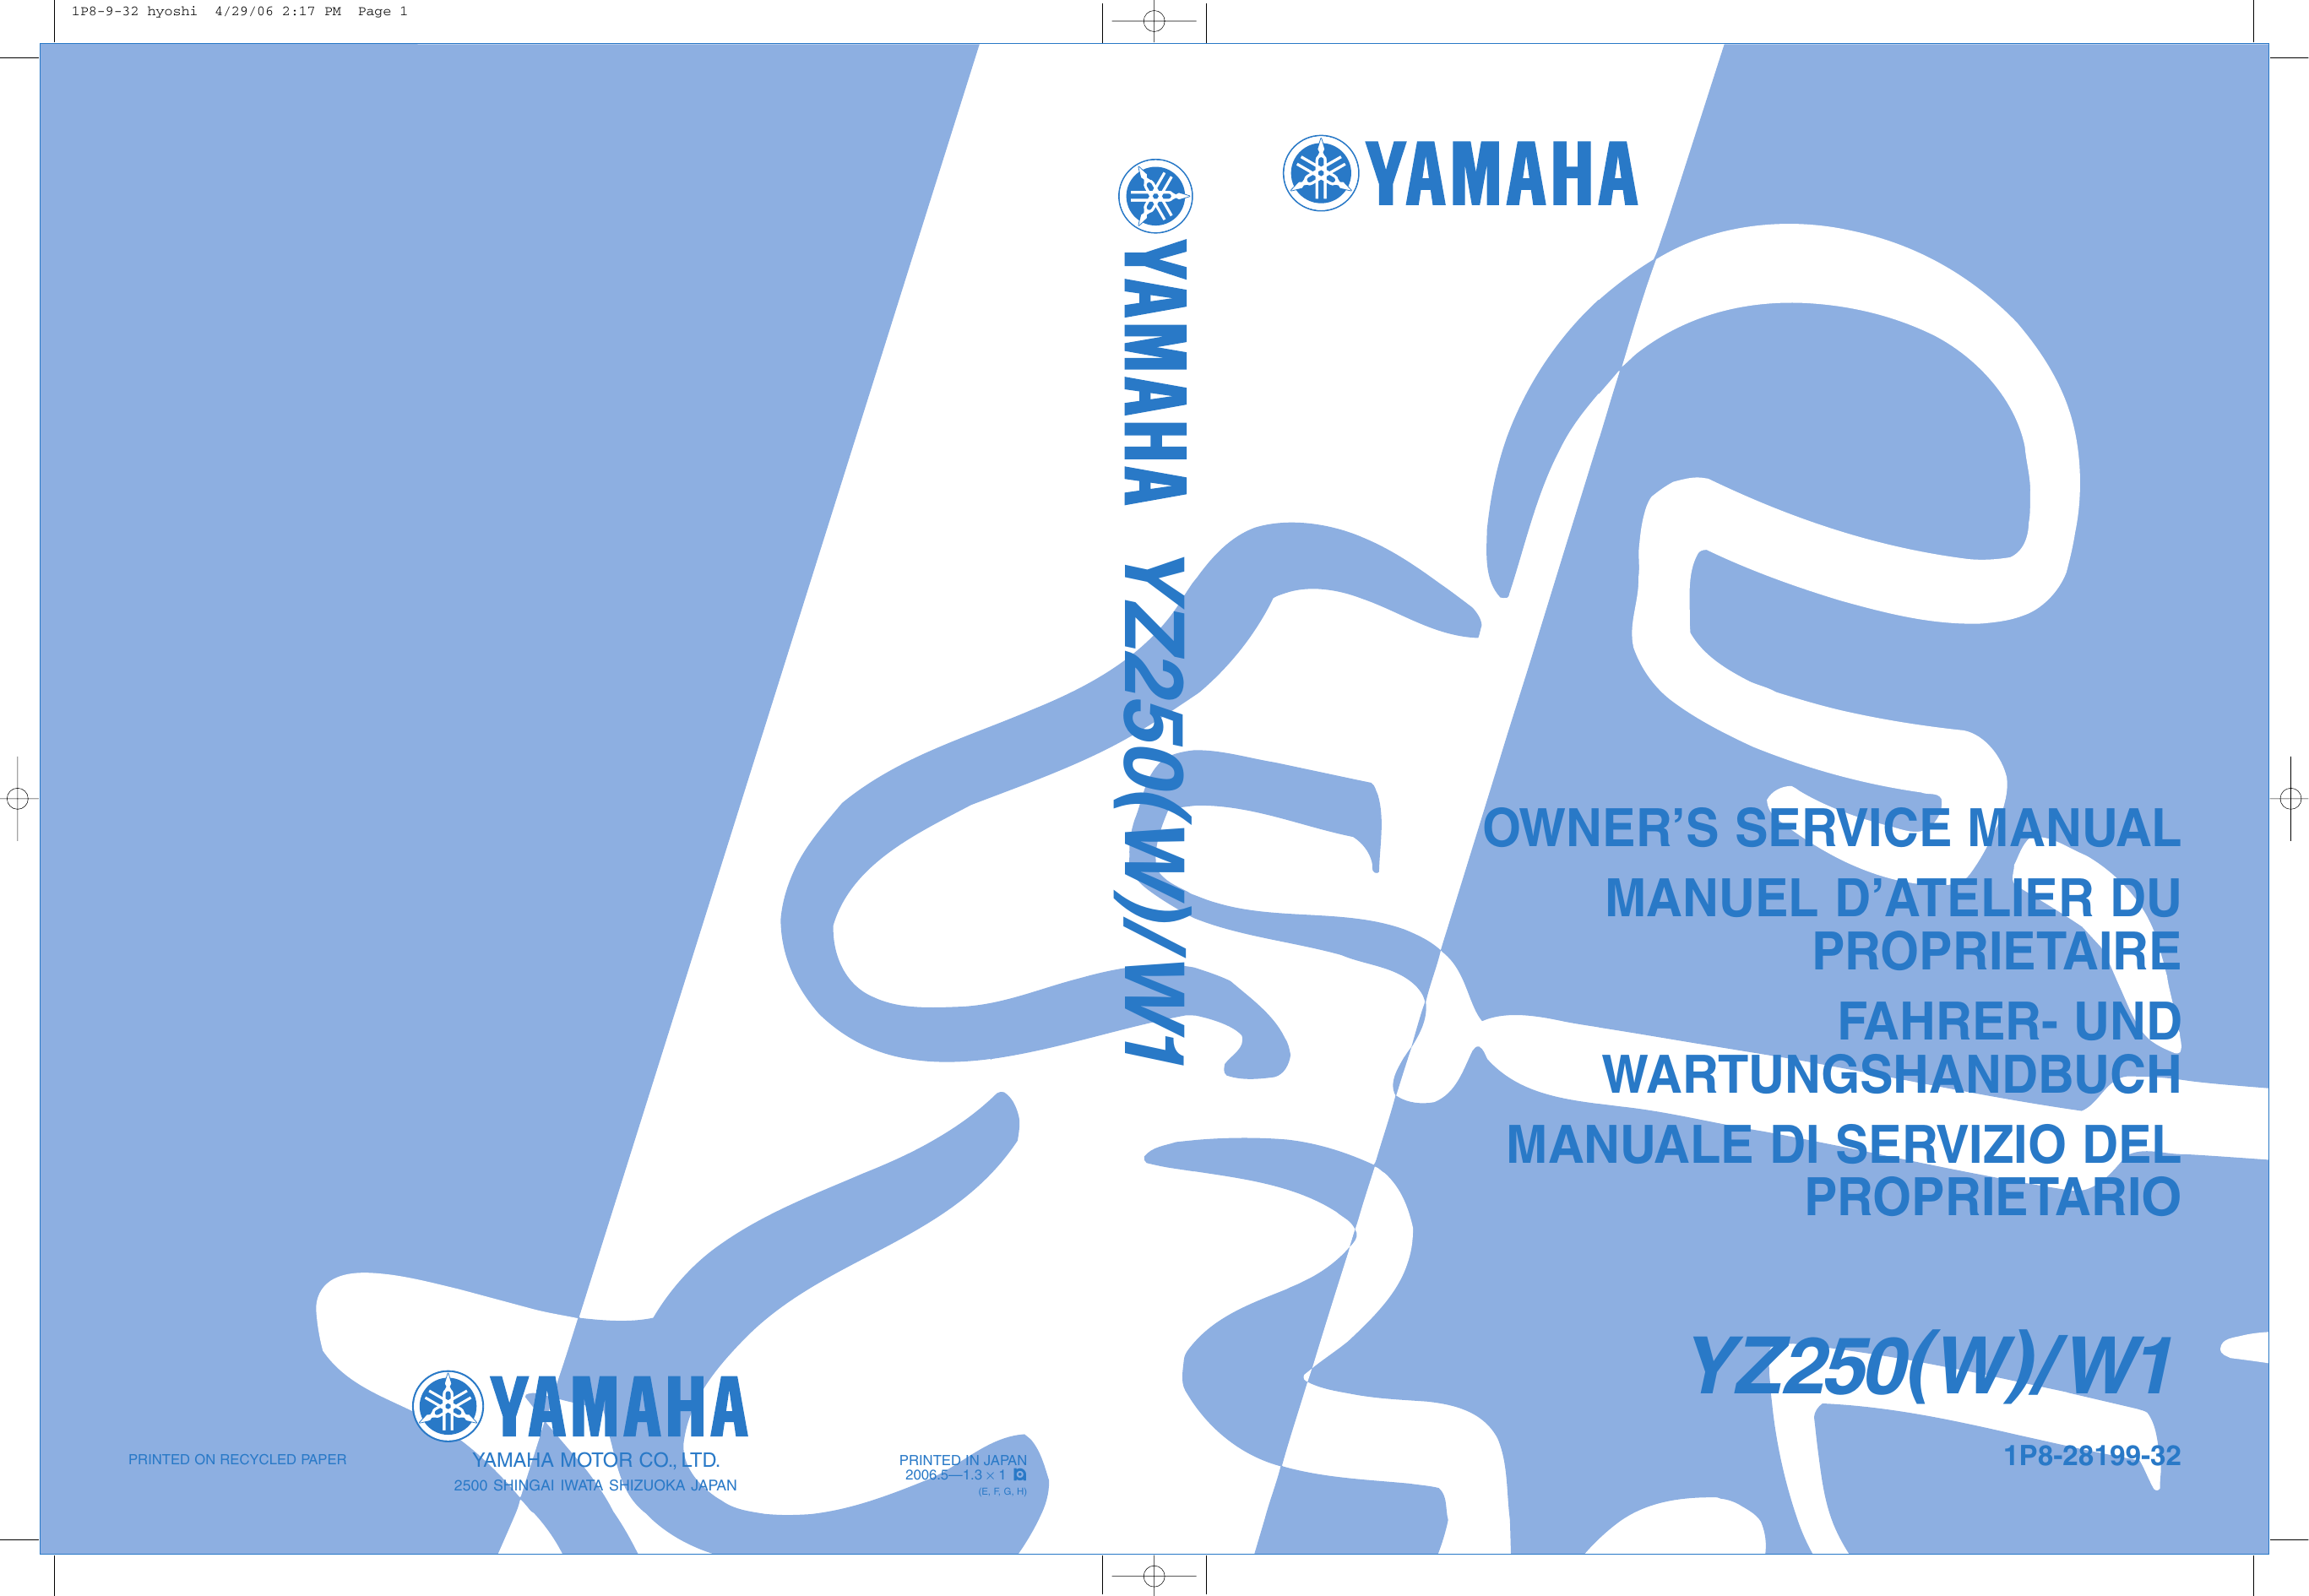 2007 Yamaha YZ 250 manual Preview image 1